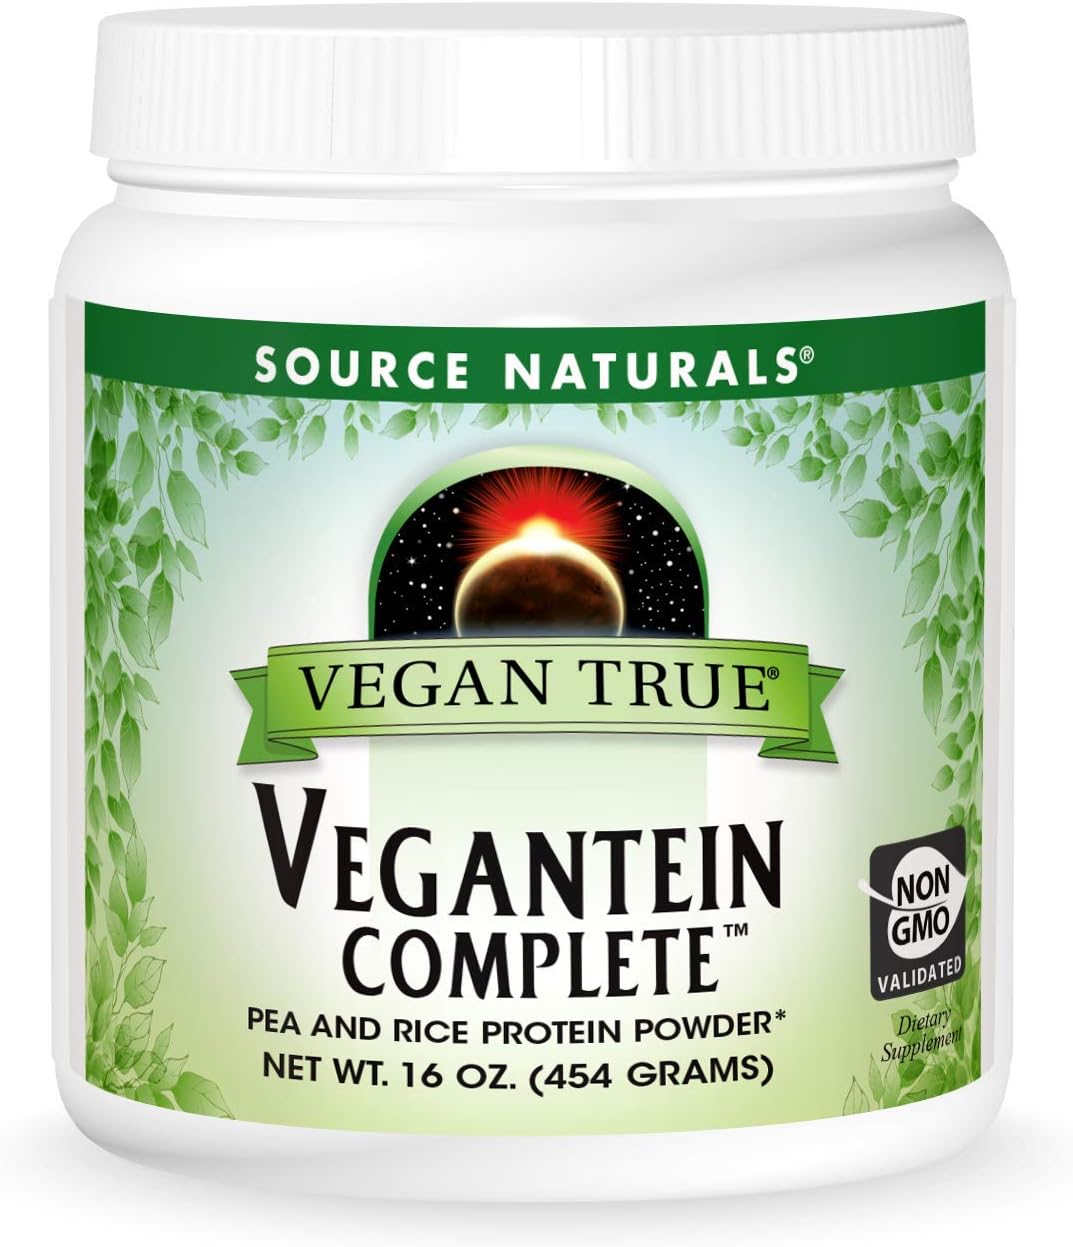 Source Naturals Vegan True Vegantein Complete, NON-GMO - Pea and Rice